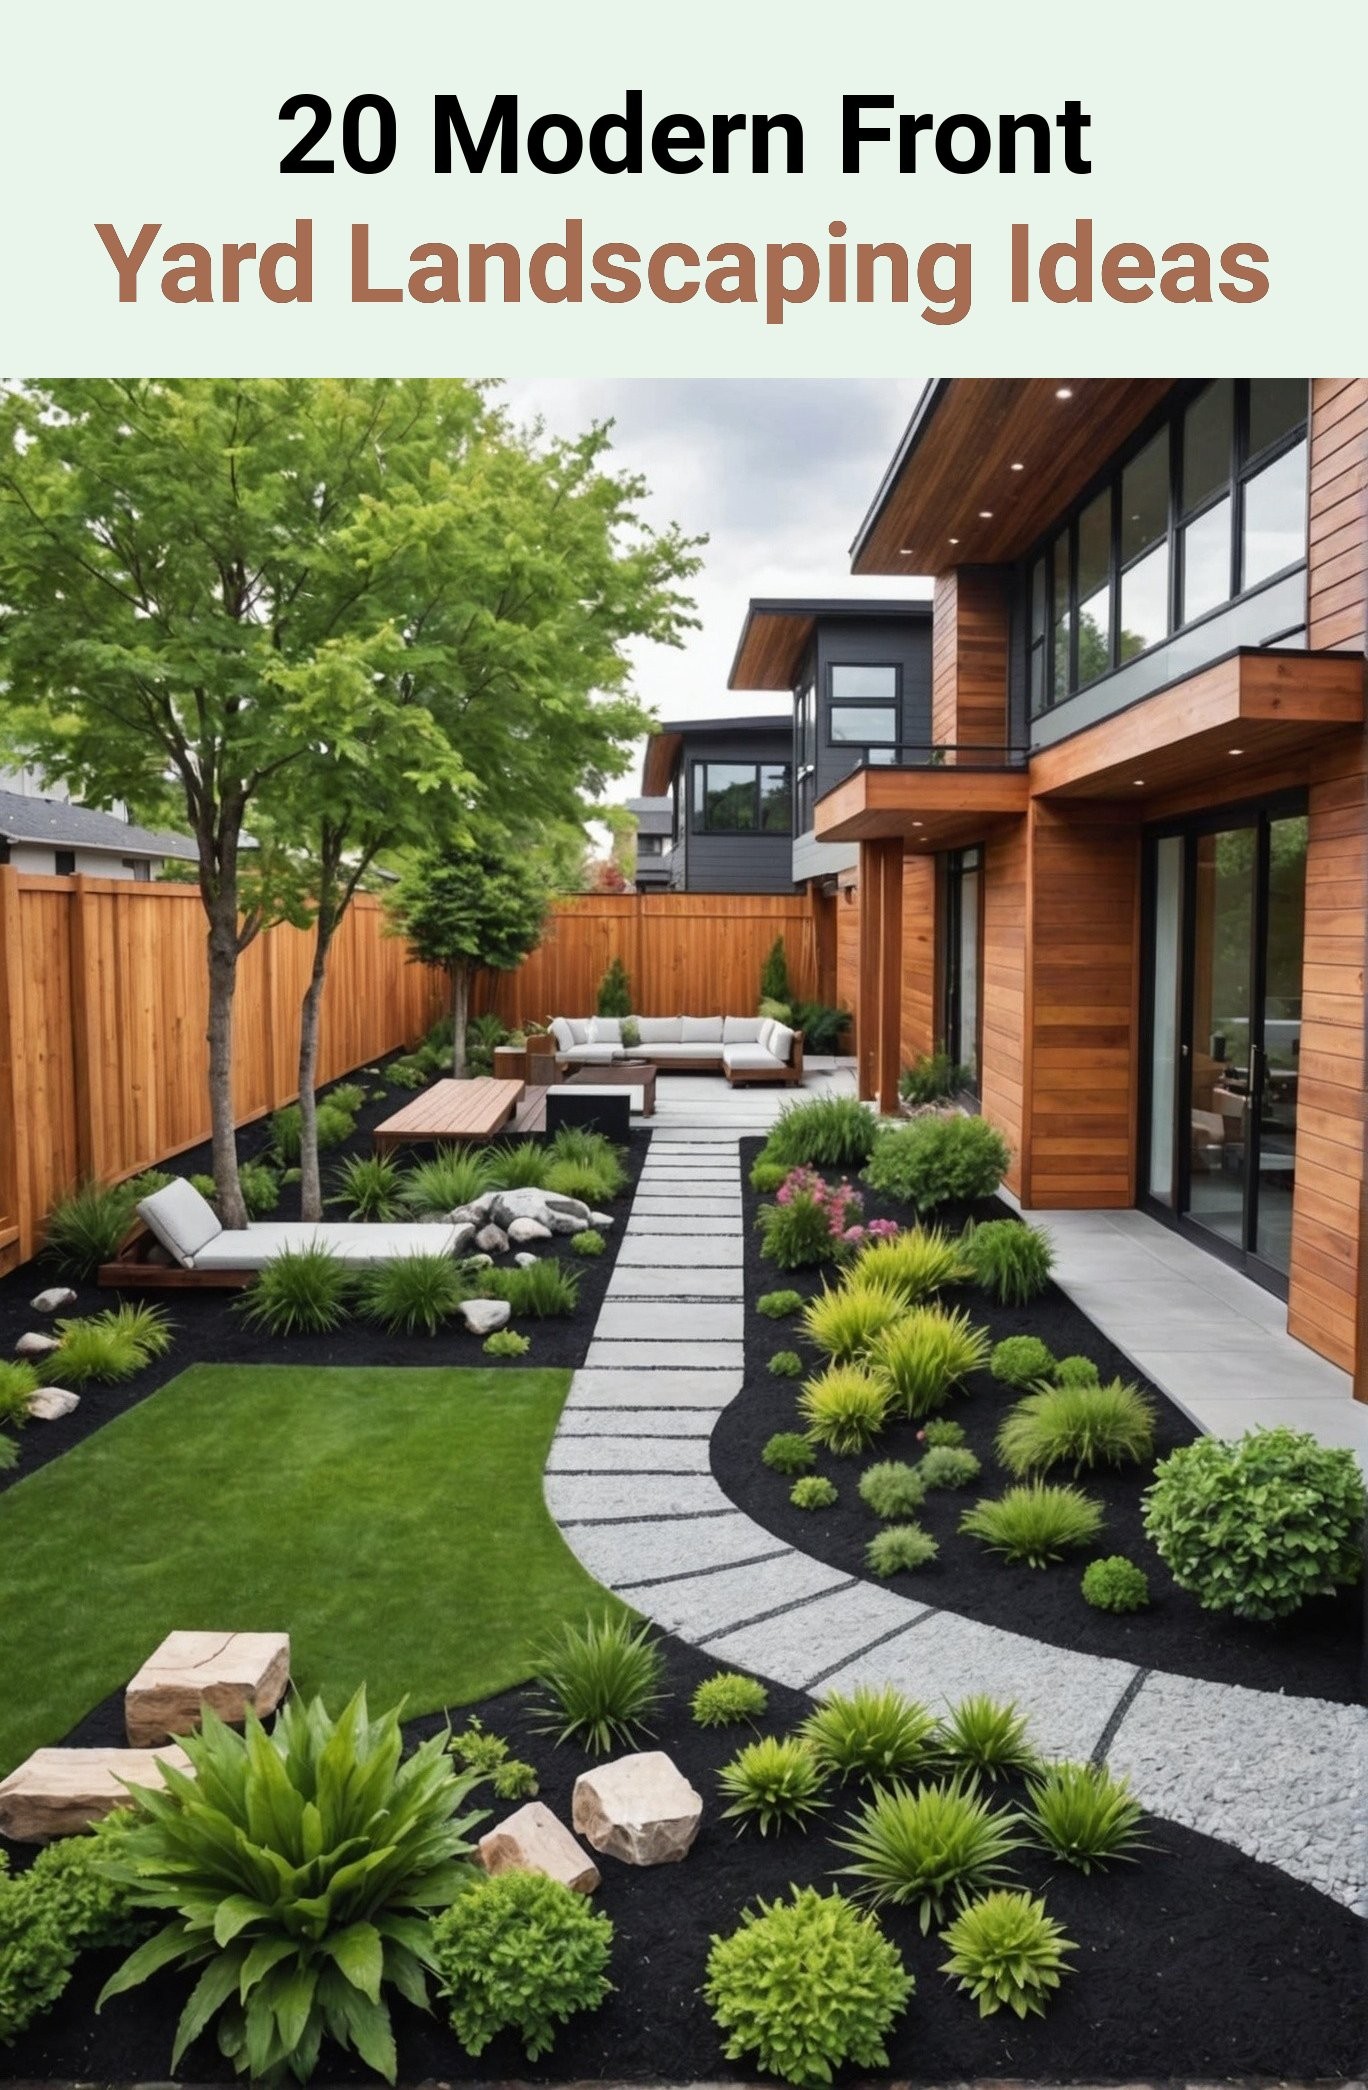 20 Modern Front Yard Landscaping Ideas